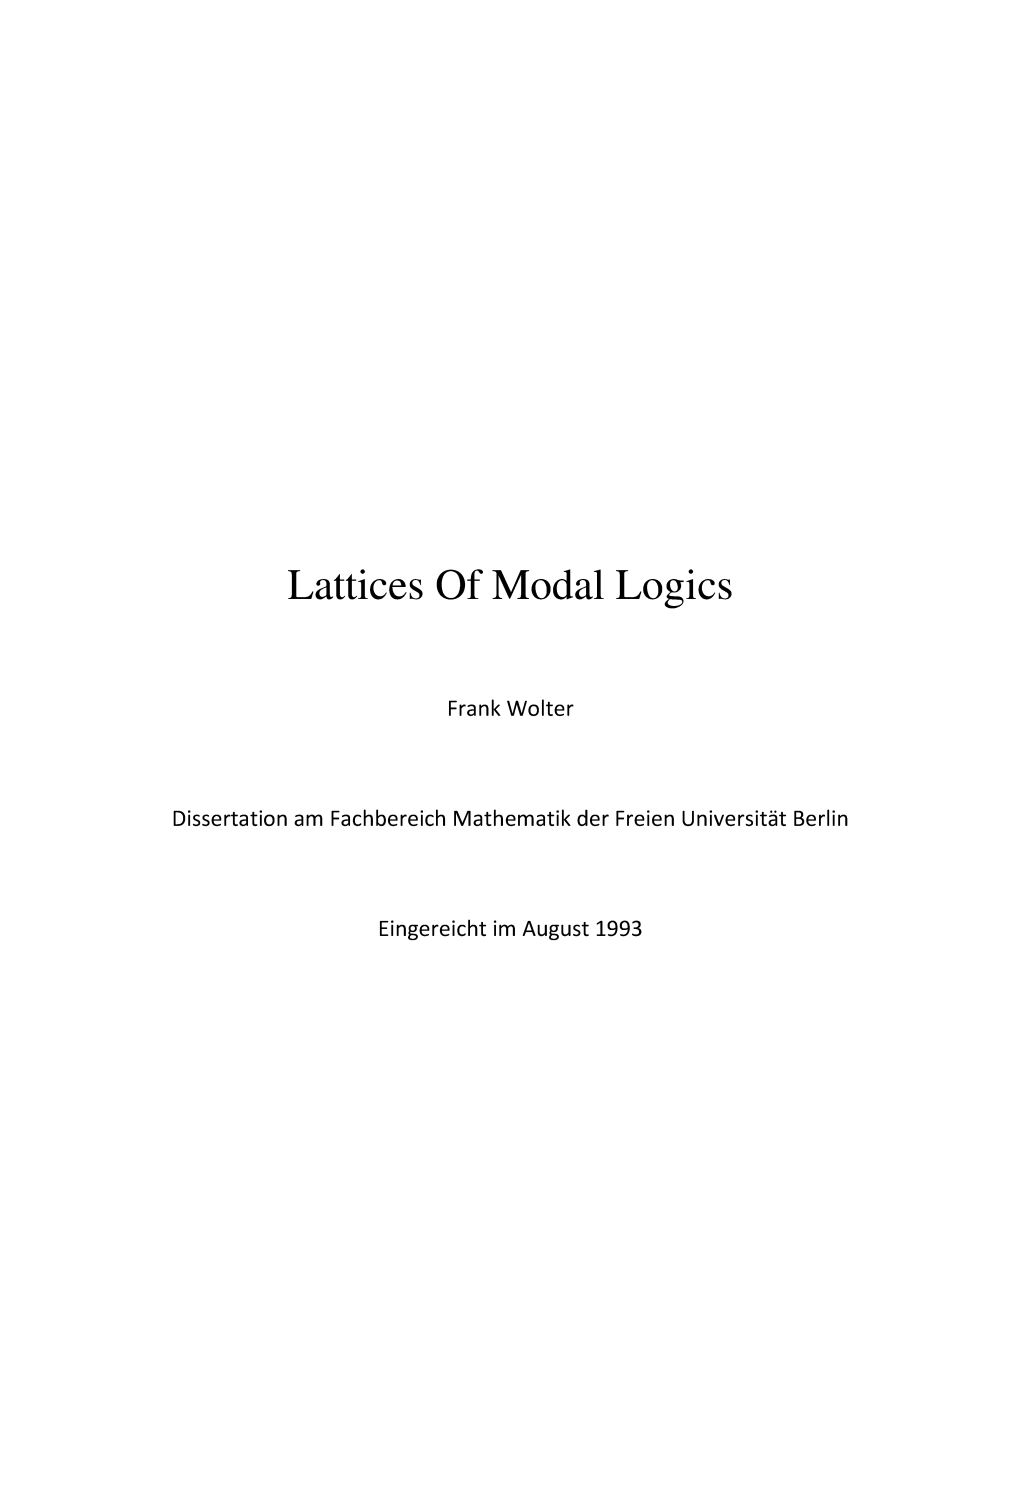 Lattices of Modal Logics